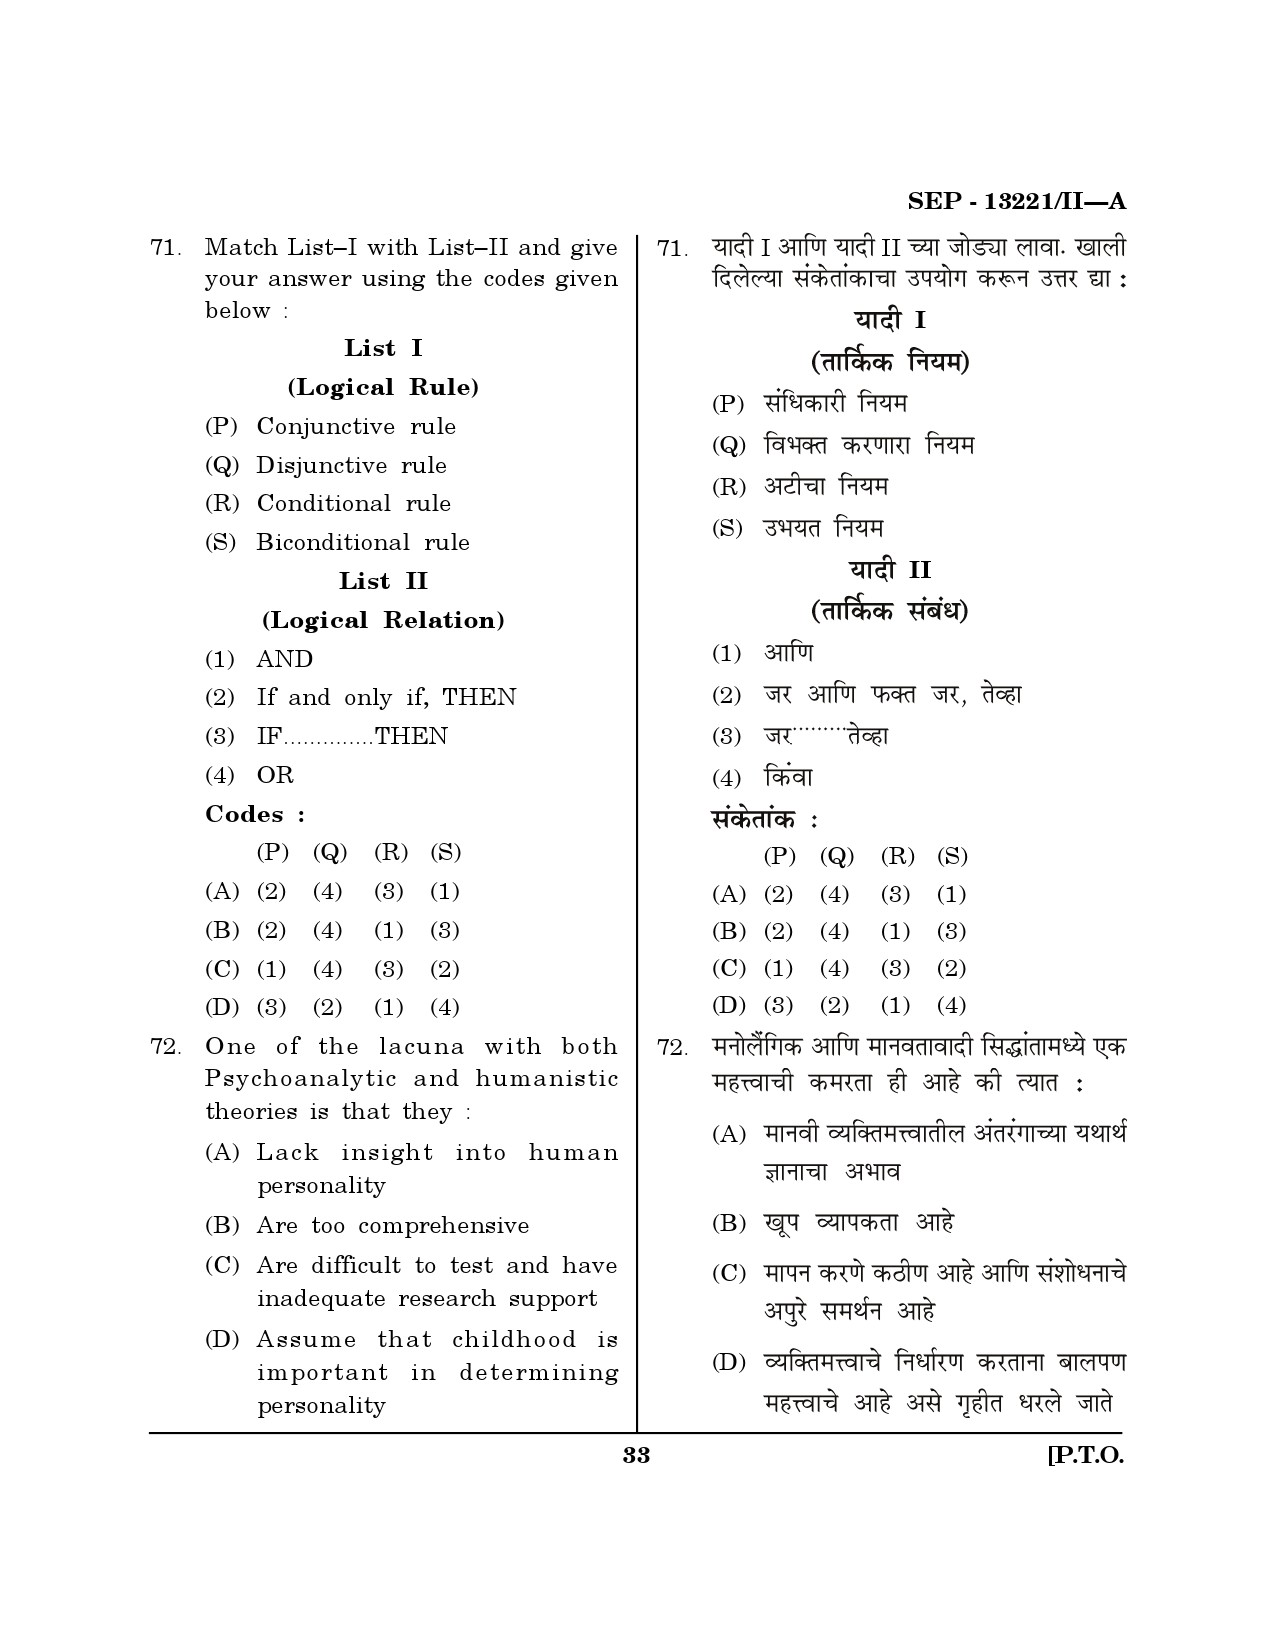 Maharashtra SET Psychology Exam Question Paper September 2021 32